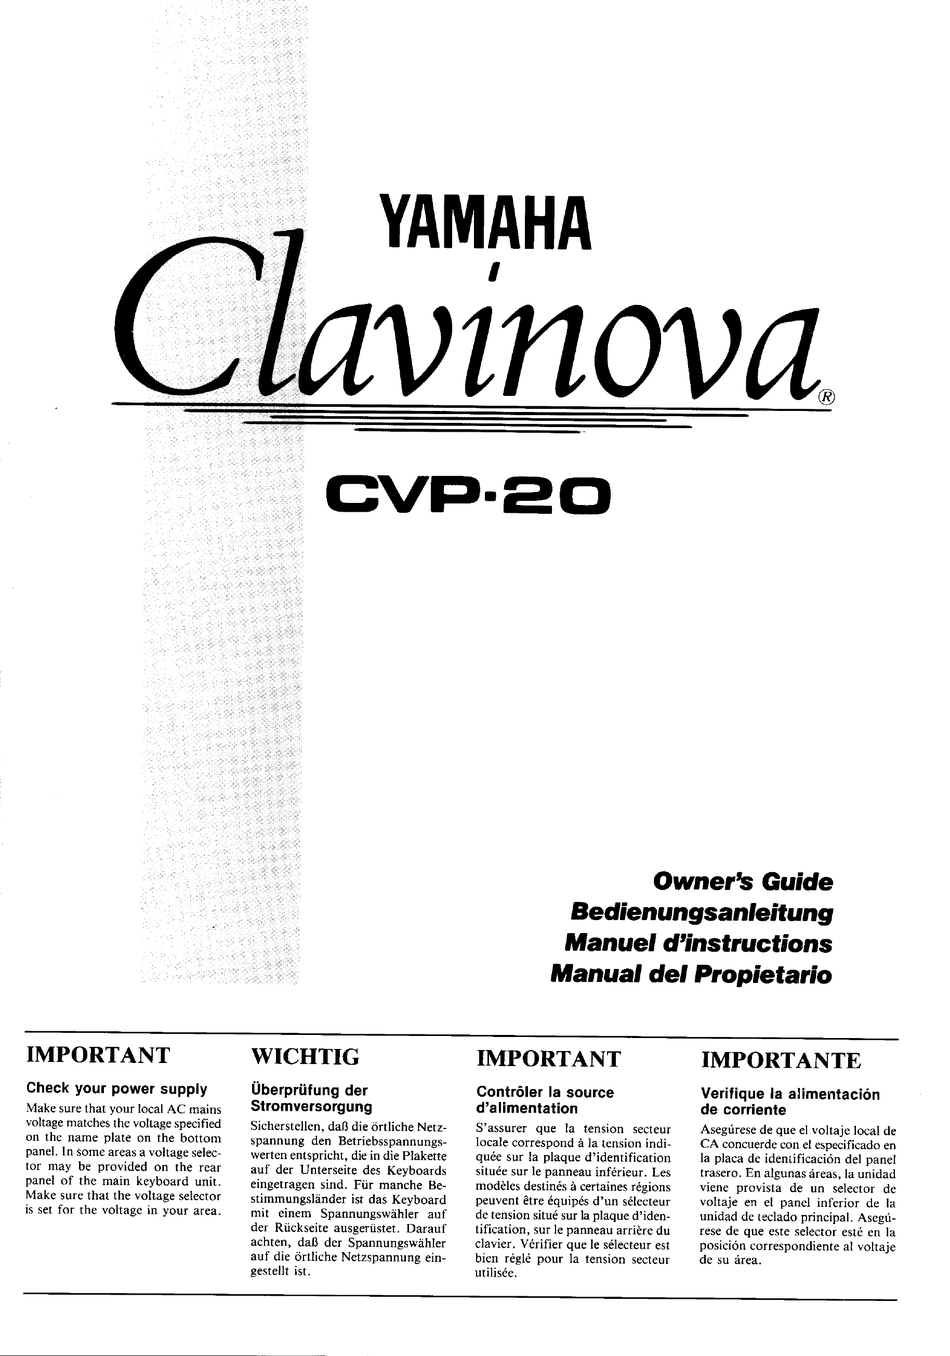 YAMAHA CLAVINOVA CVP-20 OWNER'S MANUAL Pdf Download | ManualsLib